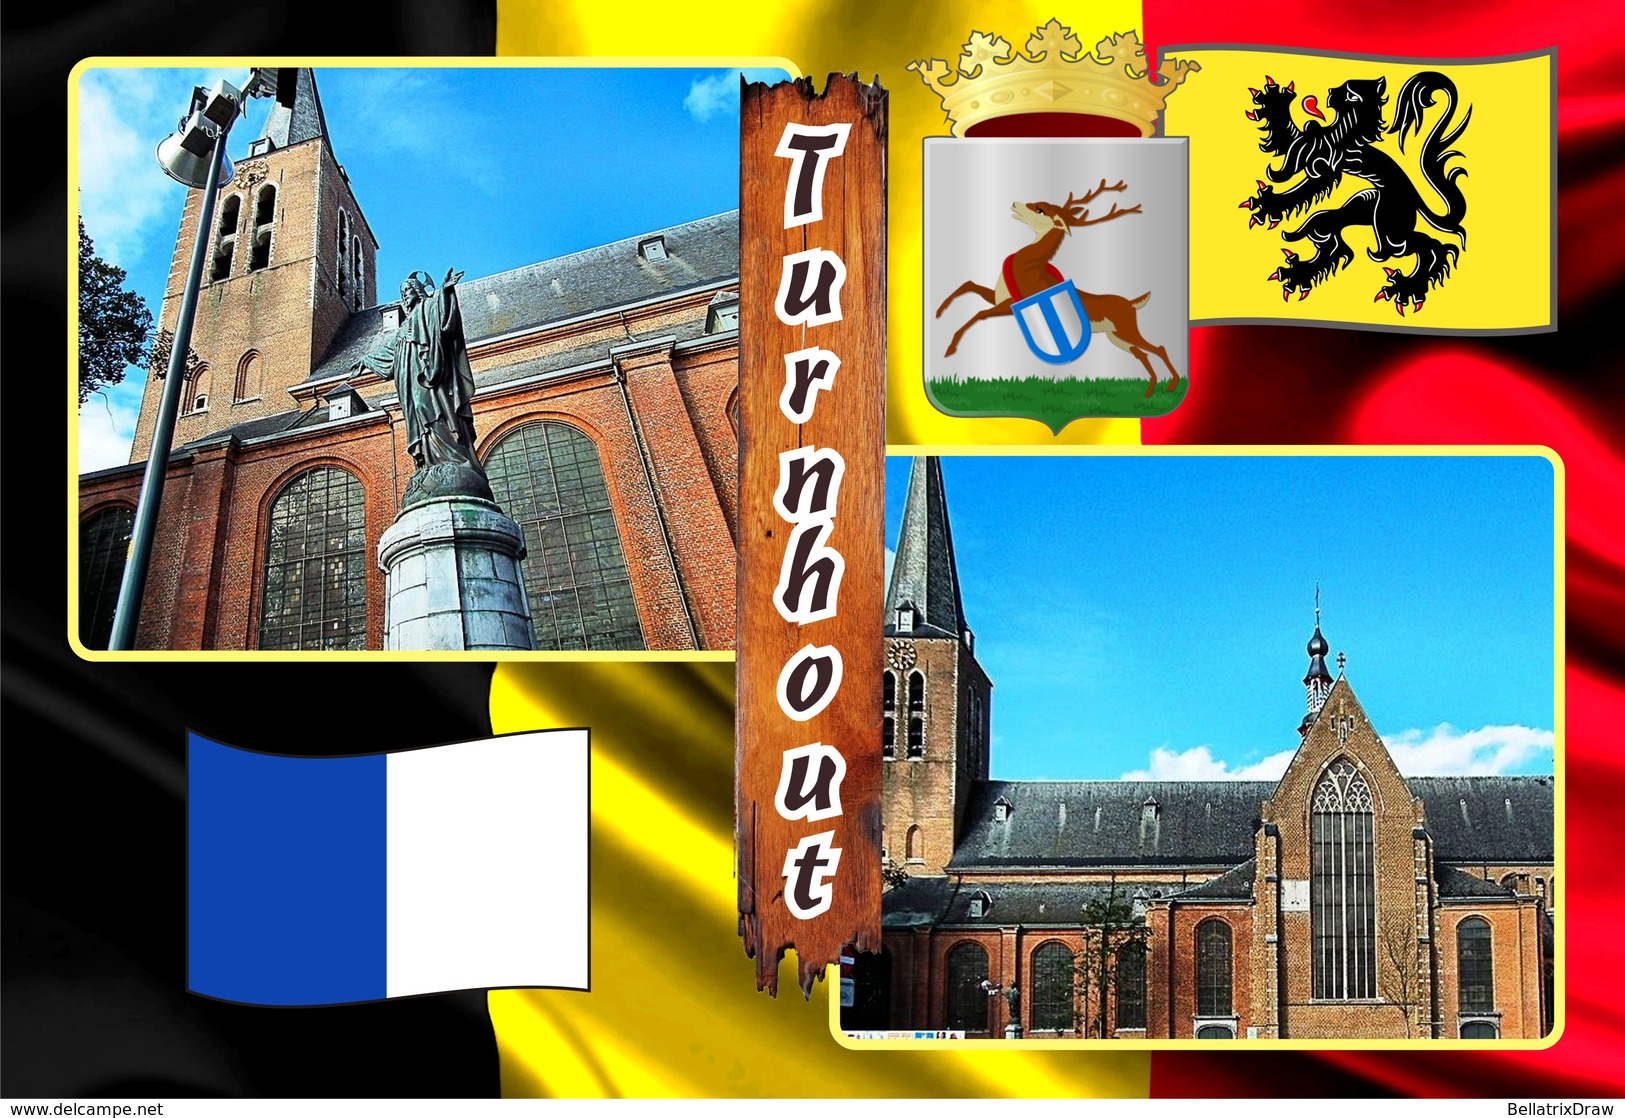 Postcards, REPRODUCTION, Municipalities of Belgium, Turnhout, duplex X, 50 pcs. (448 to 497)